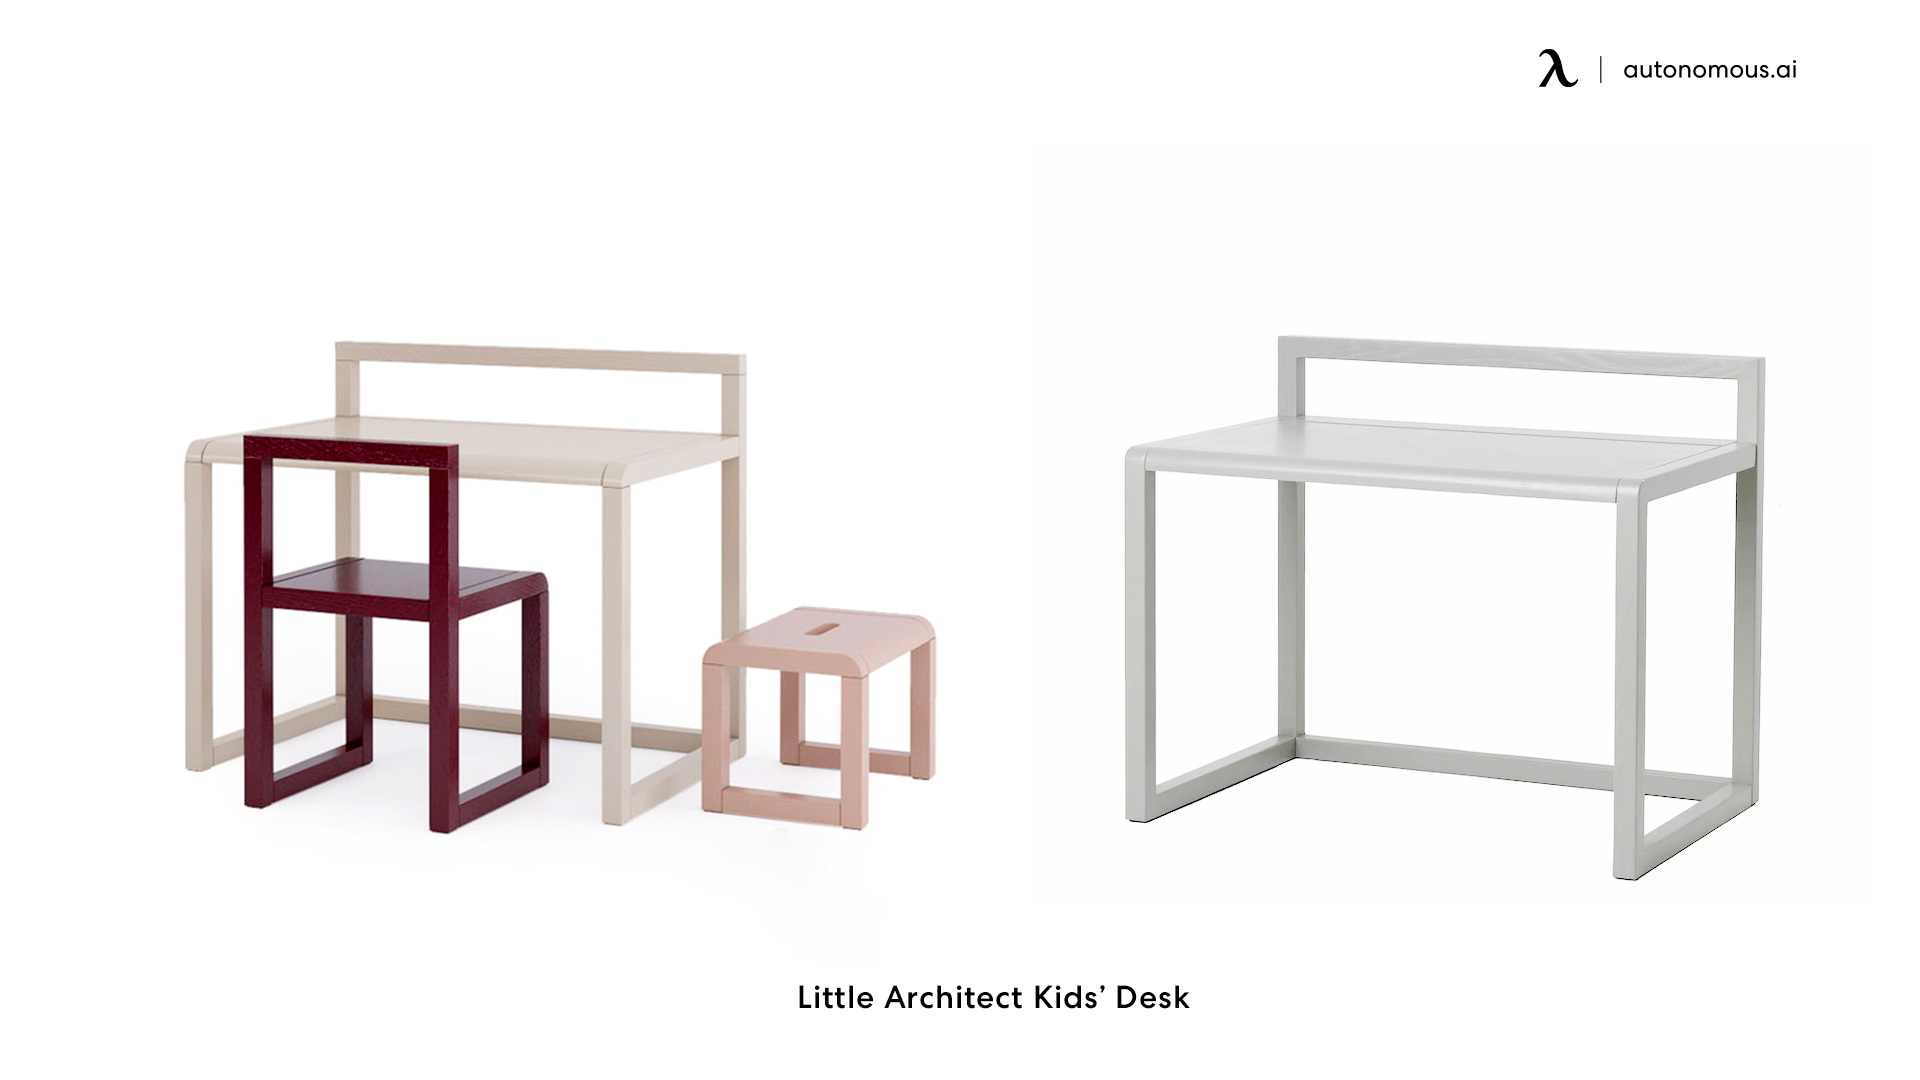 Little Architect Kids’ Desk